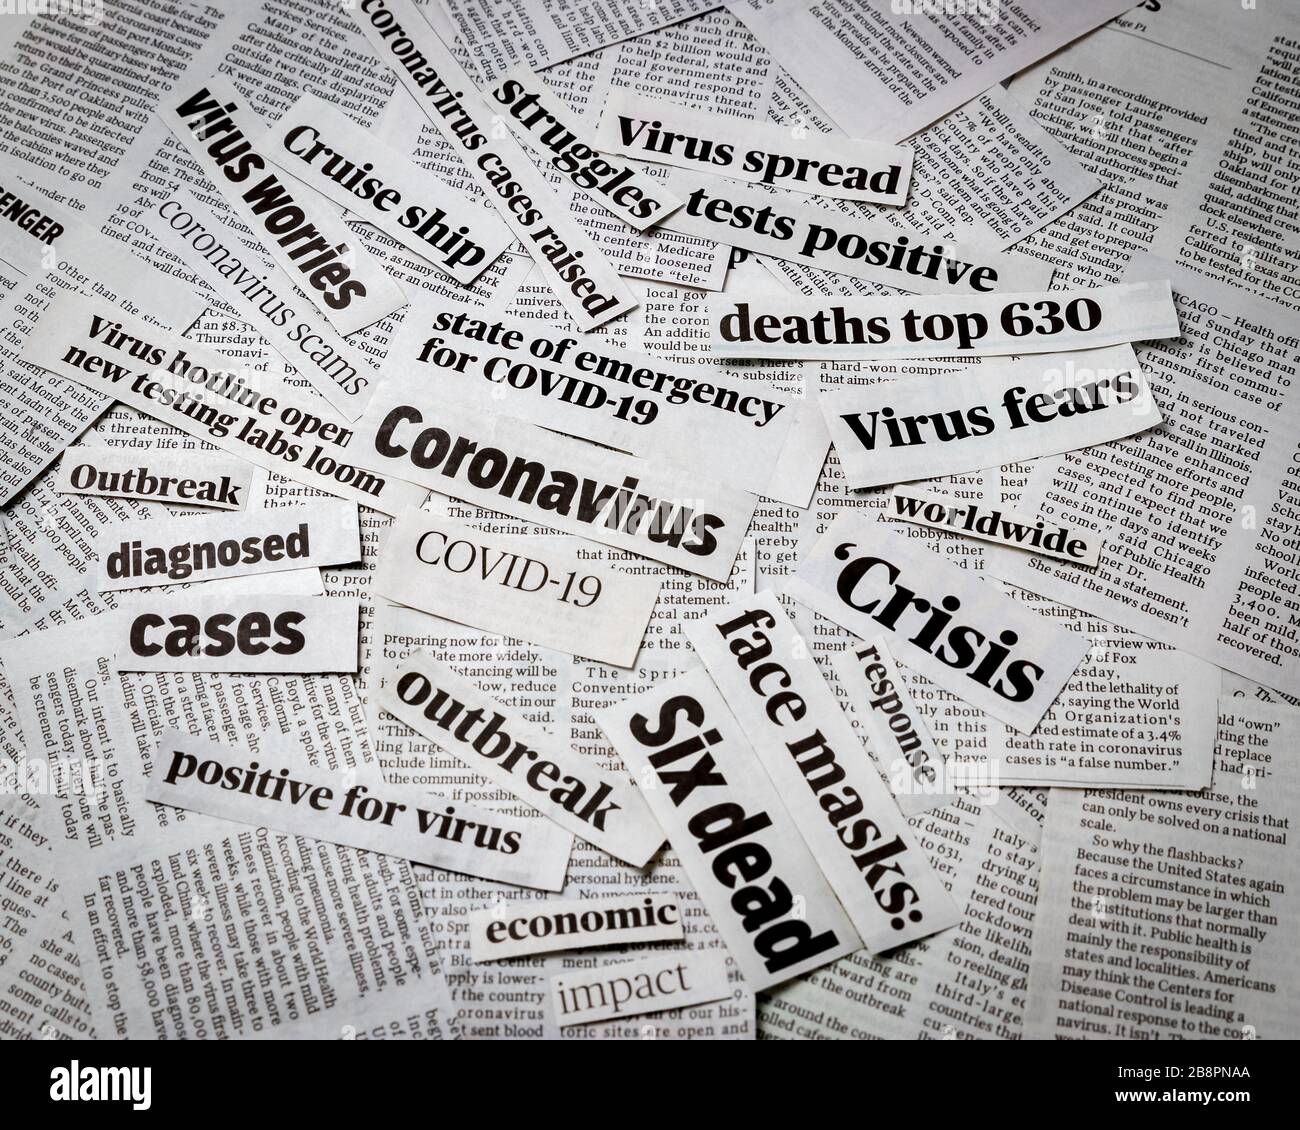 Covid-19 coronavirus newspaper headline clippings. Print media information isolated Stock Photo